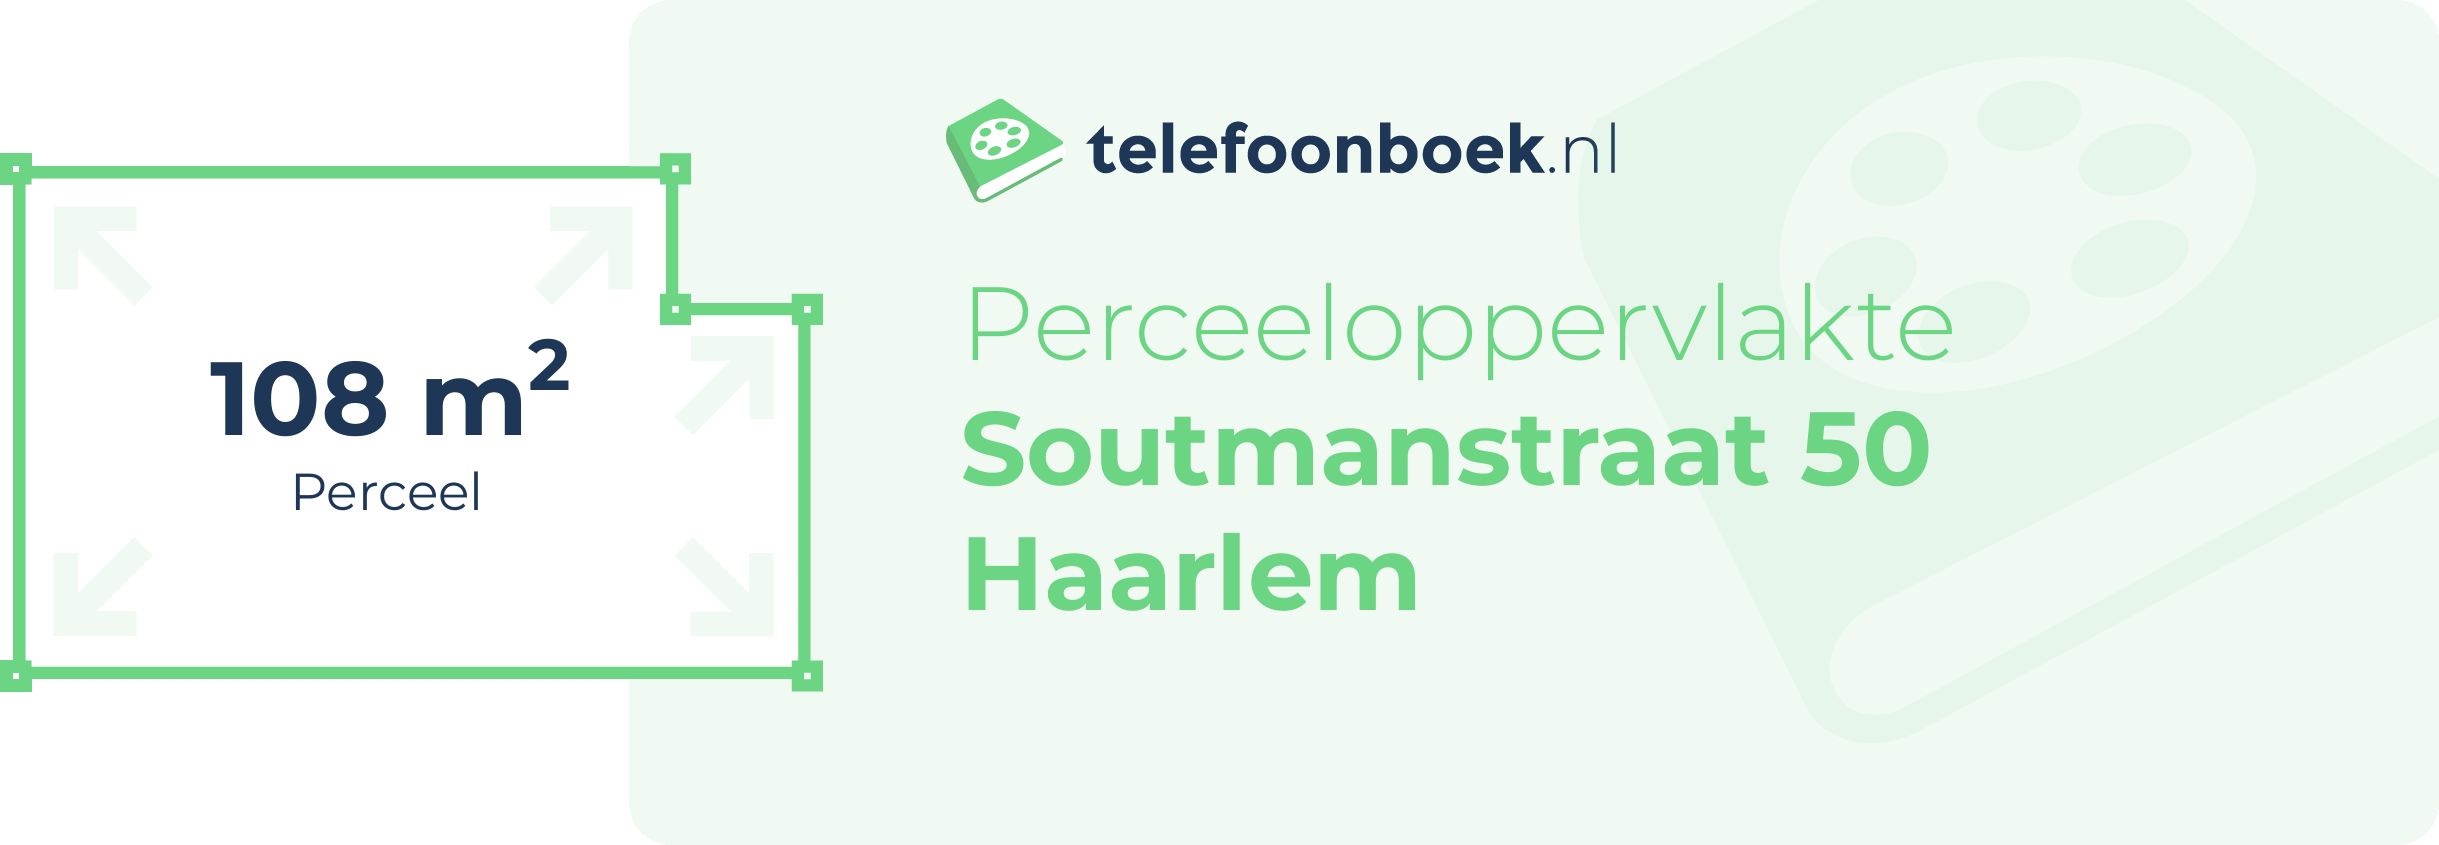 Perceeloppervlakte Soutmanstraat 50 Haarlem